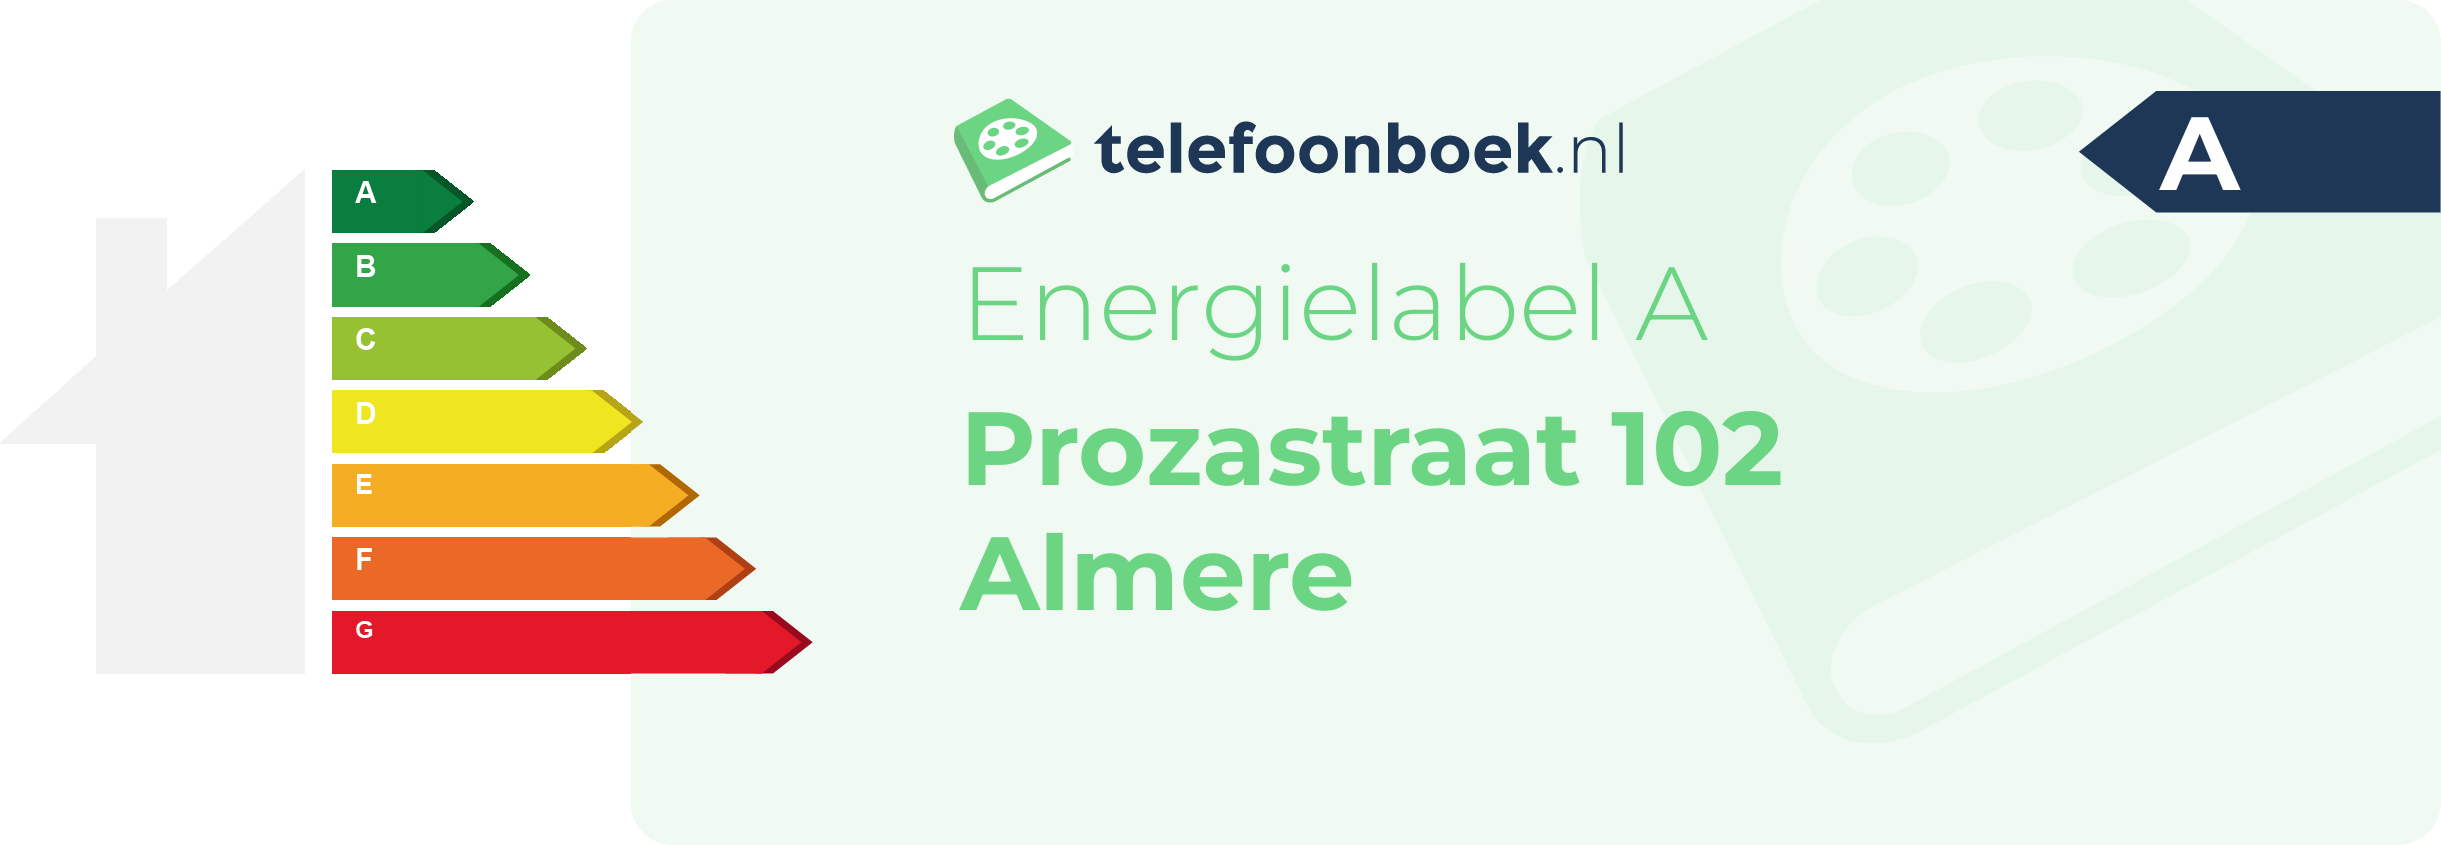 Energielabel Prozastraat 102 Almere